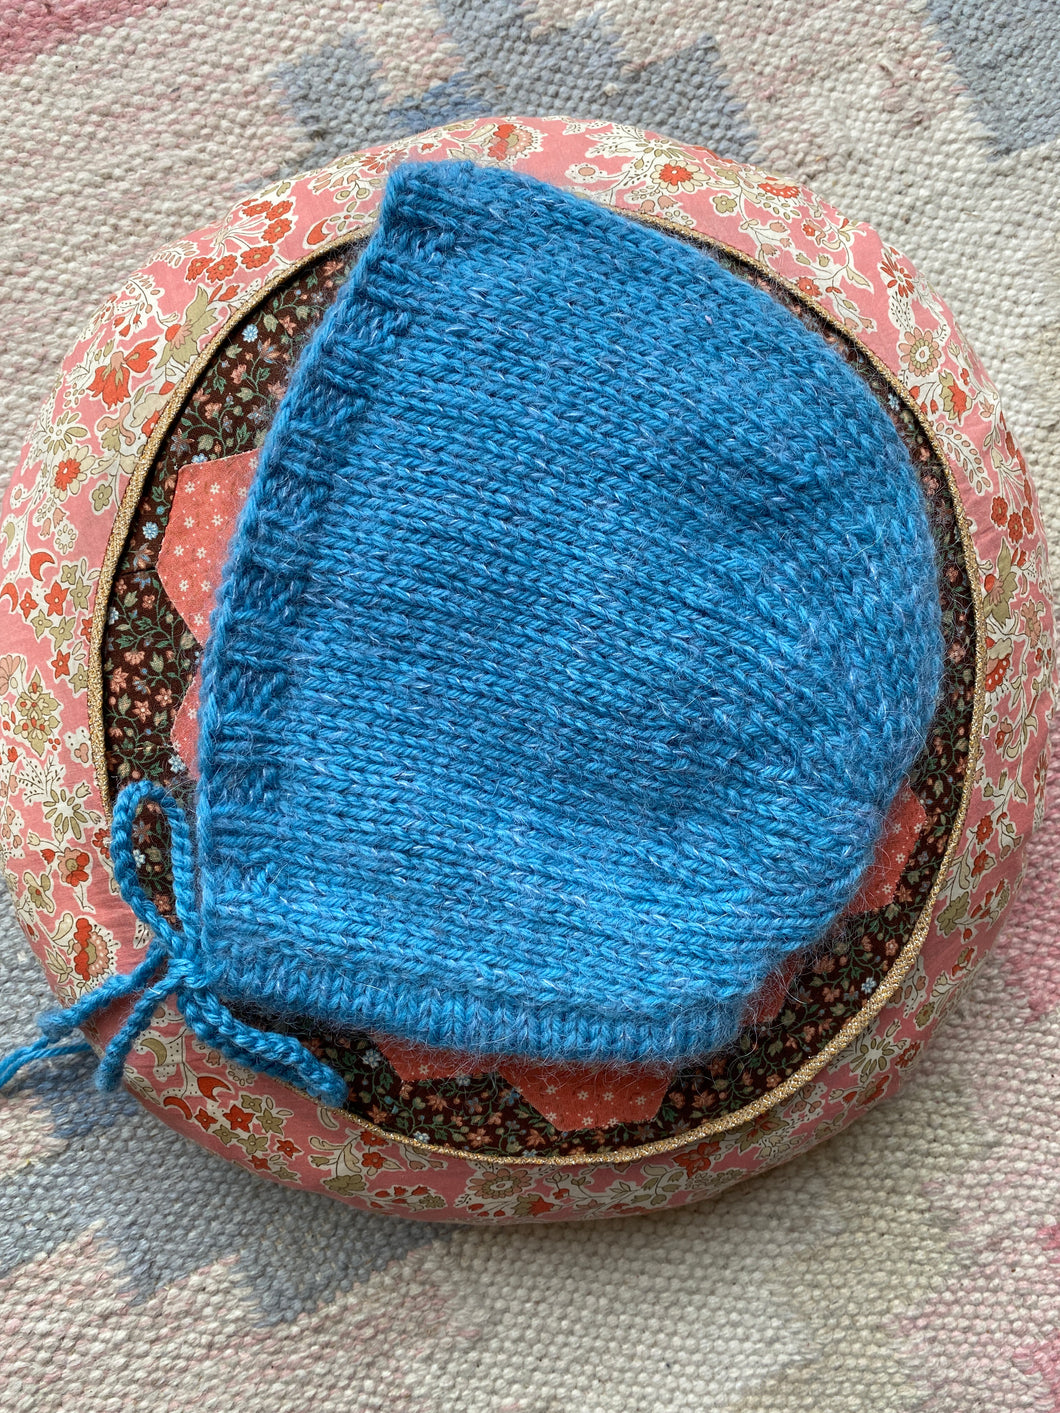 Deima’s bonnet - knitting pattern (English)